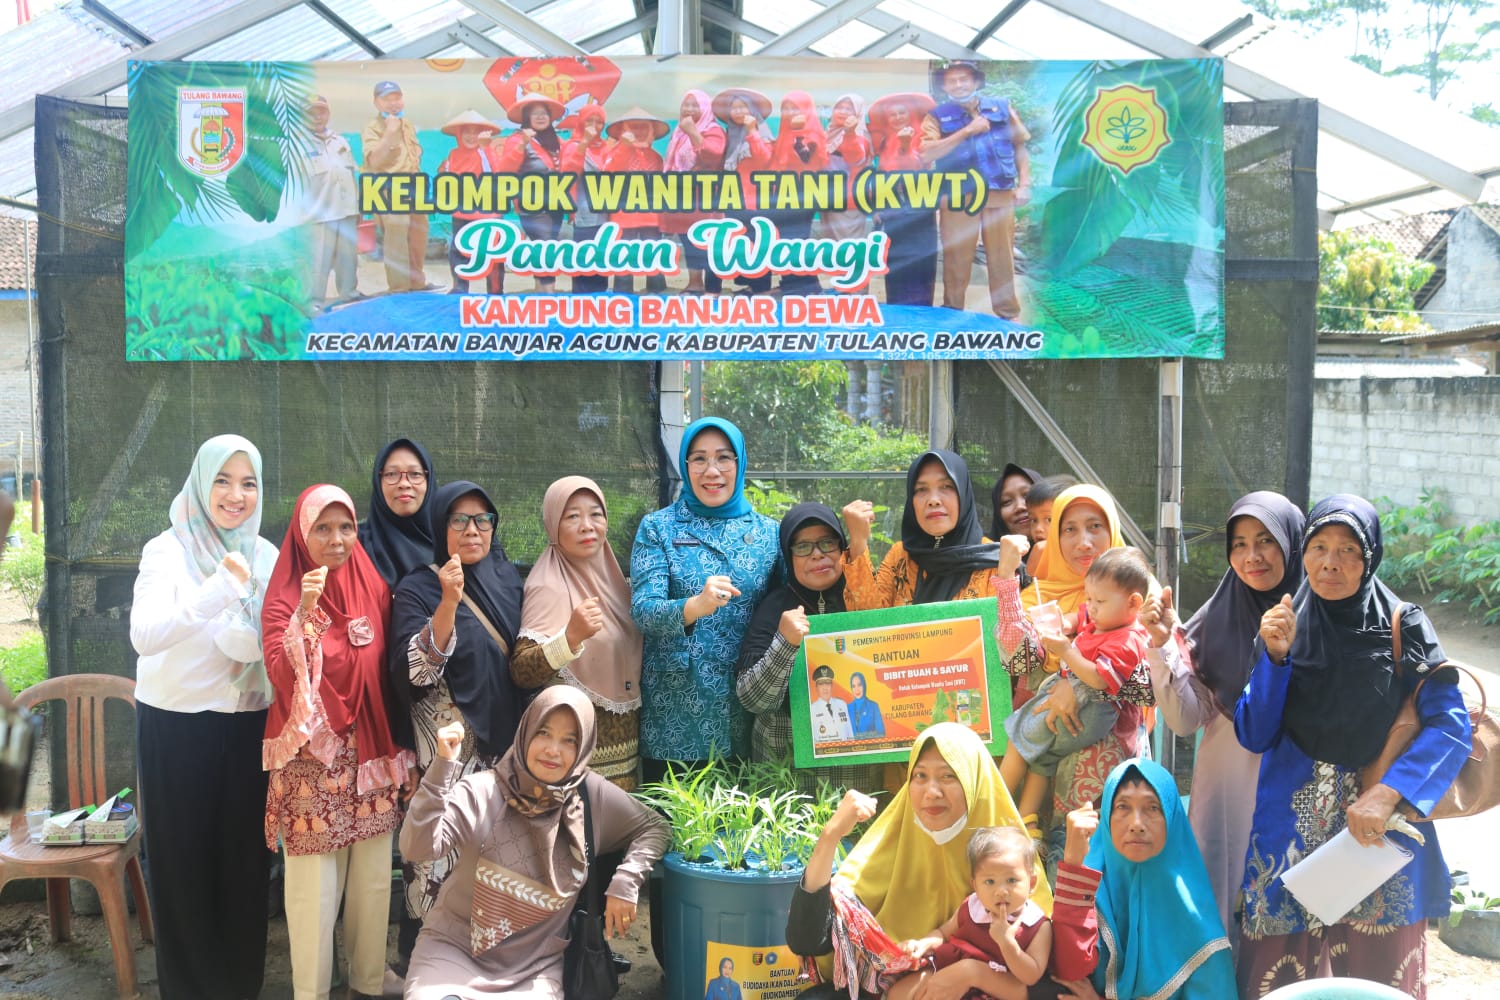 TP PKK Provinsi Lampung, Melanjutkan Kunjungan Kerja di Kampung Banjar Dewa, Tulangbawang